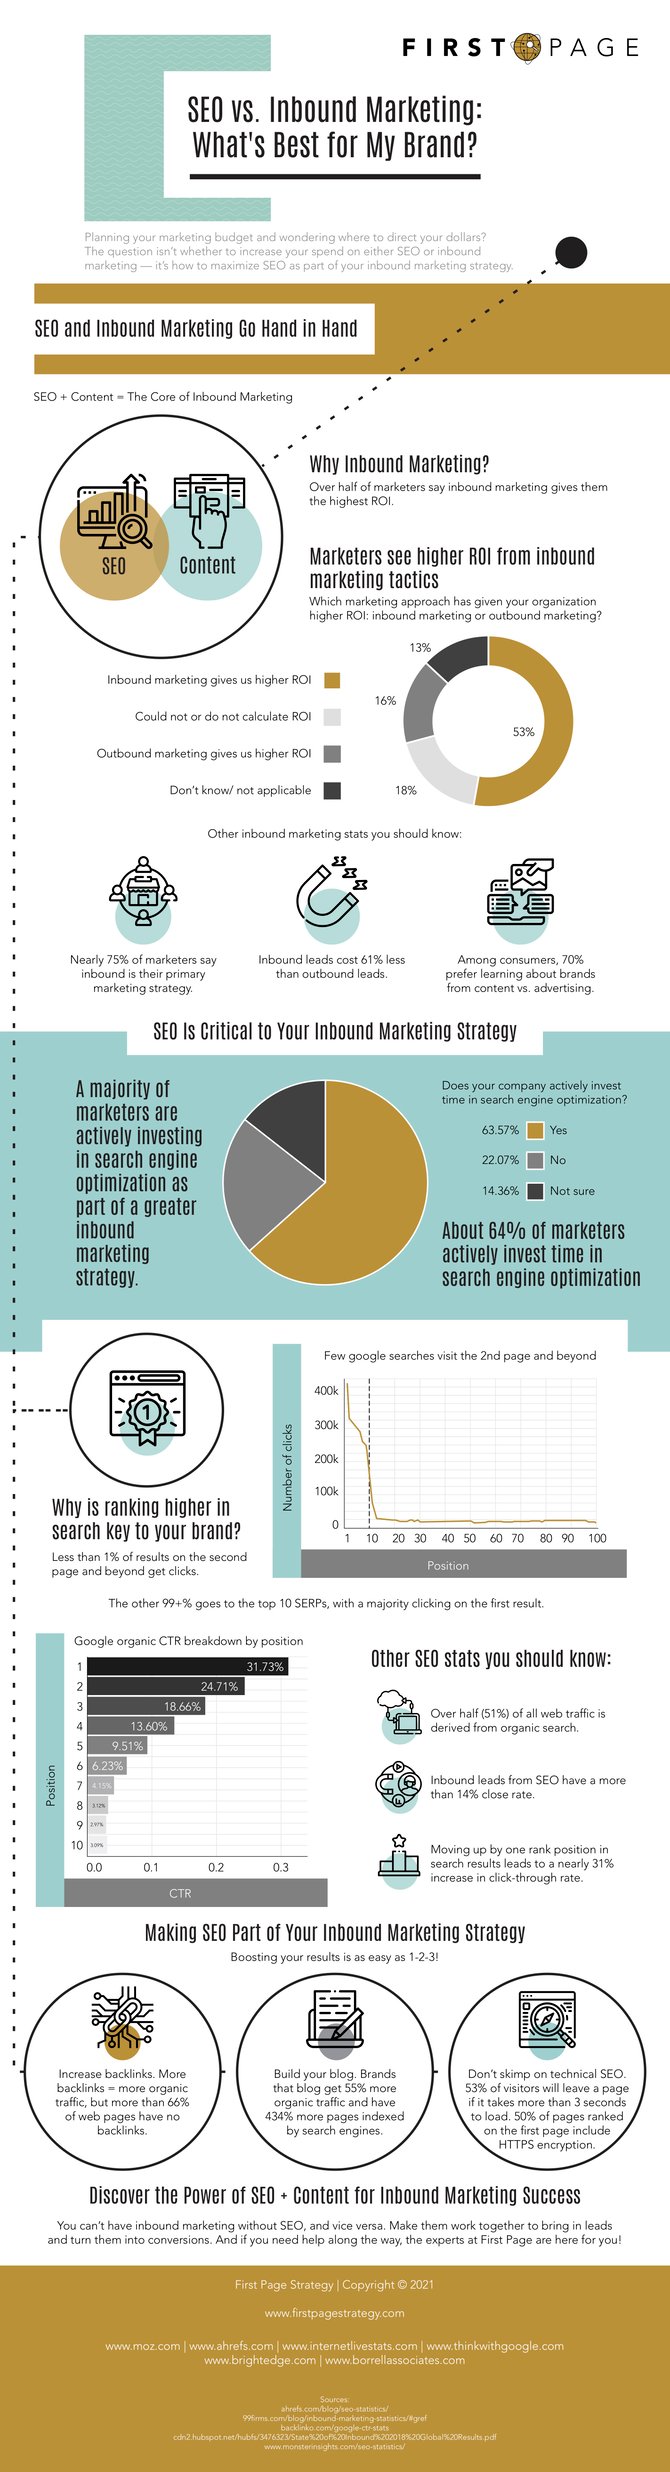 SEO vs Inbound Marketing infographic [INFOGRAPHIC}